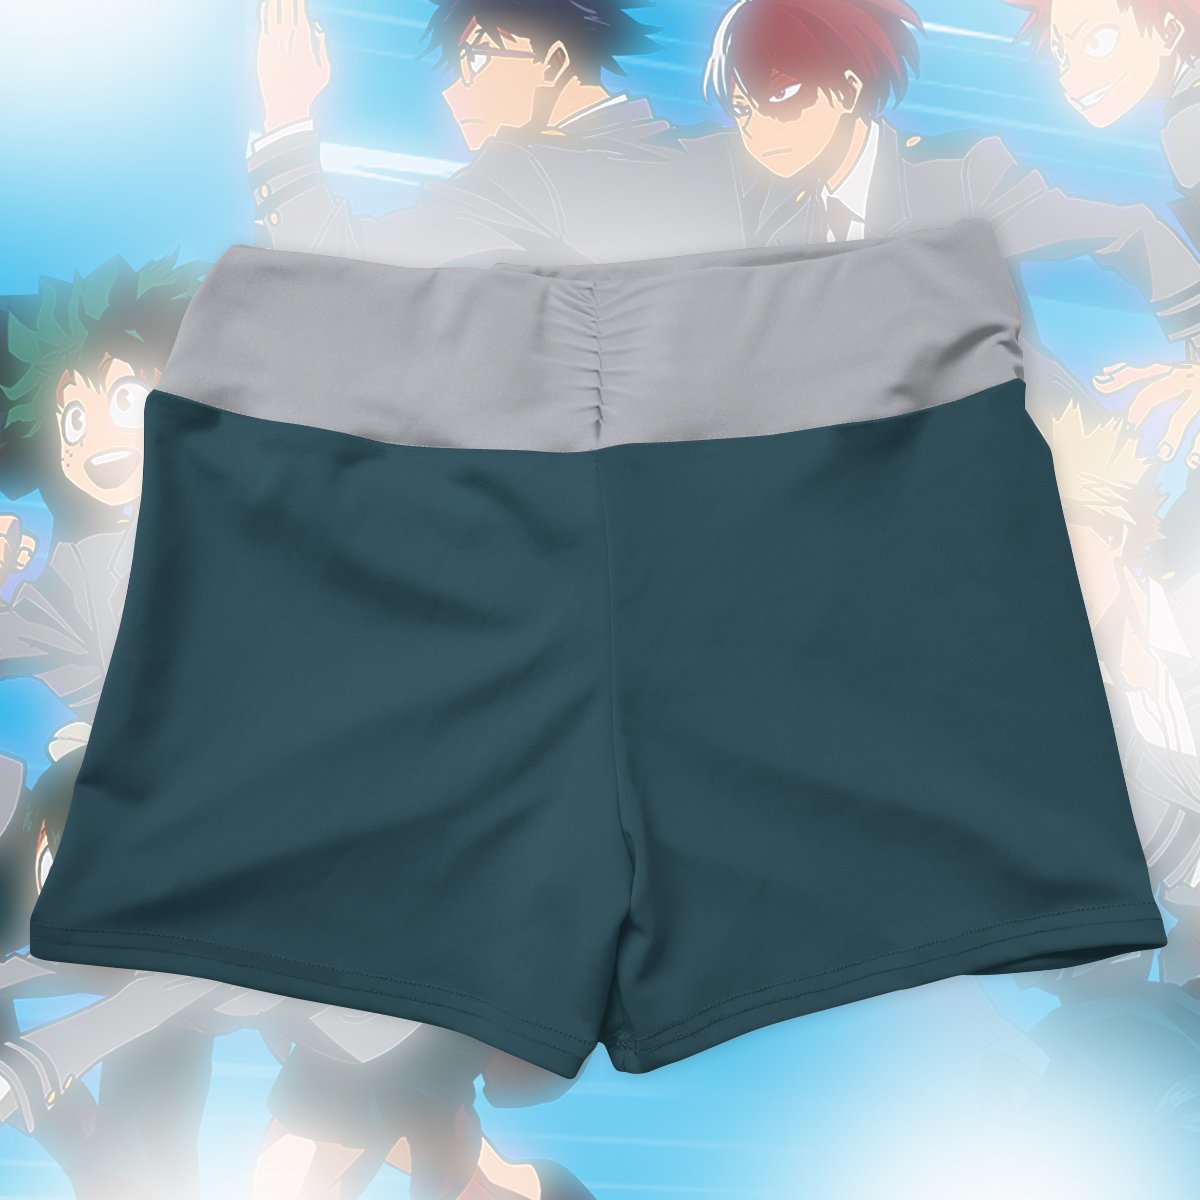 ua high uniform active wear set 499334 - Anime Swimsuits